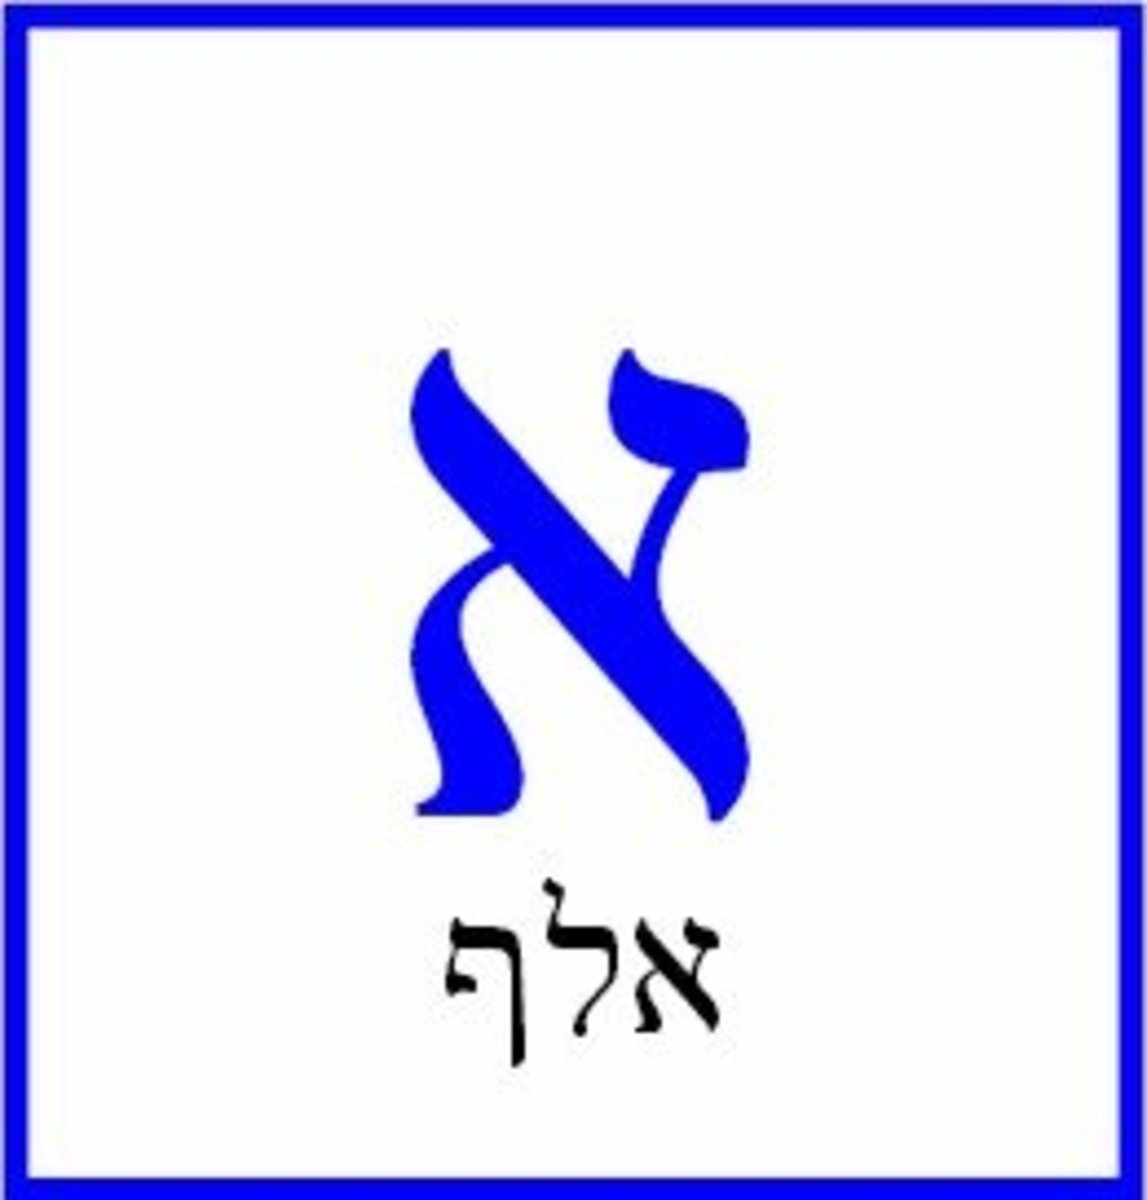 Hebrew Letter Aleph – אלף